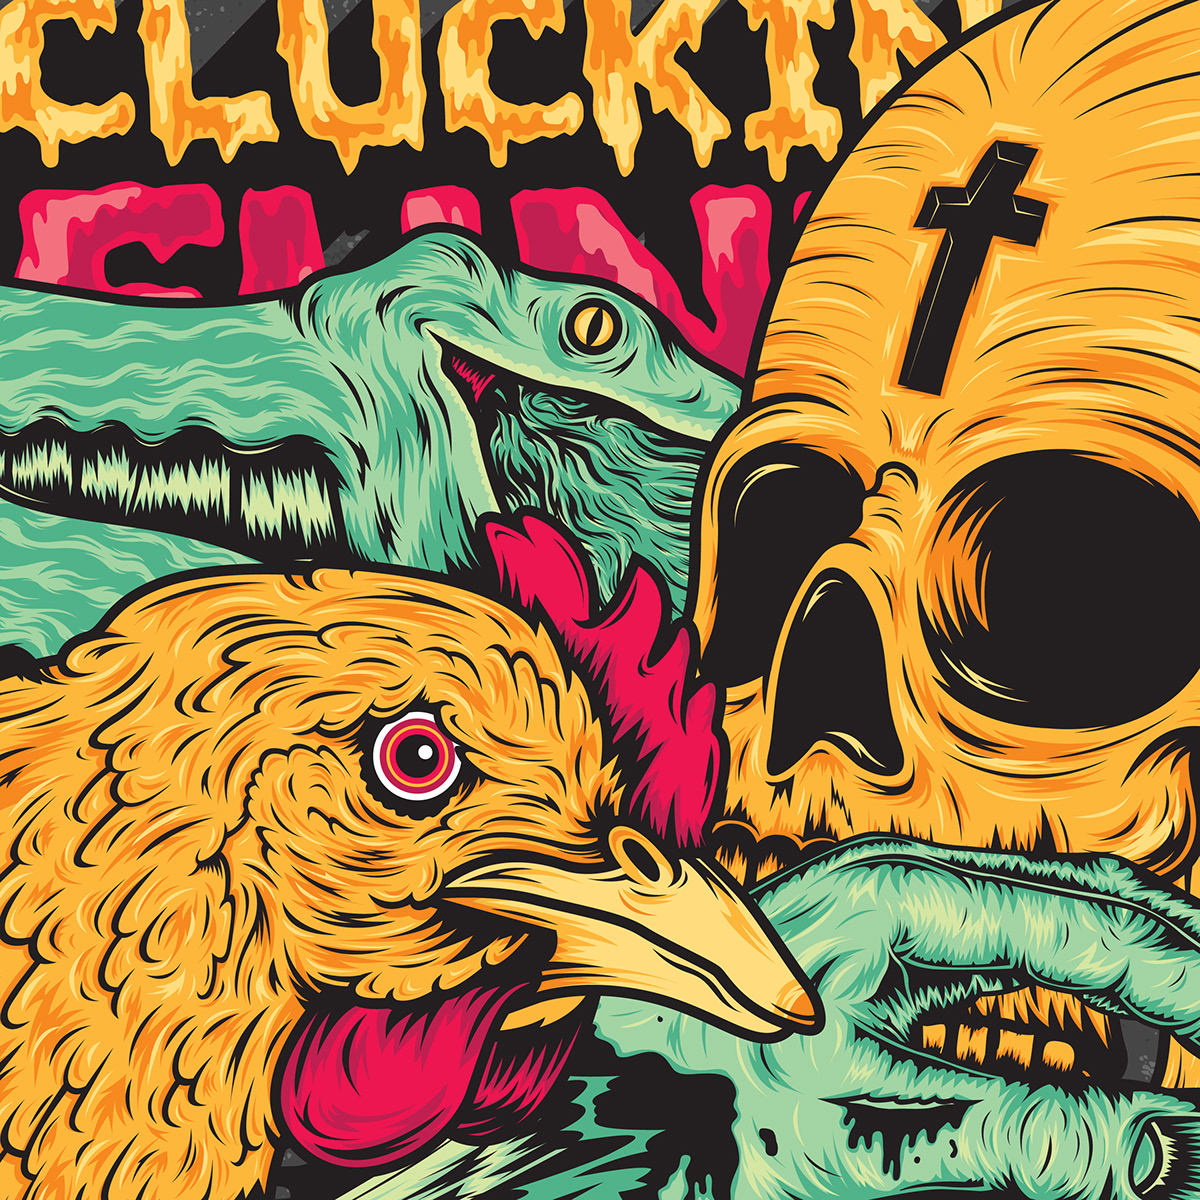 snowboard zombie chicken skull snowboard graphics